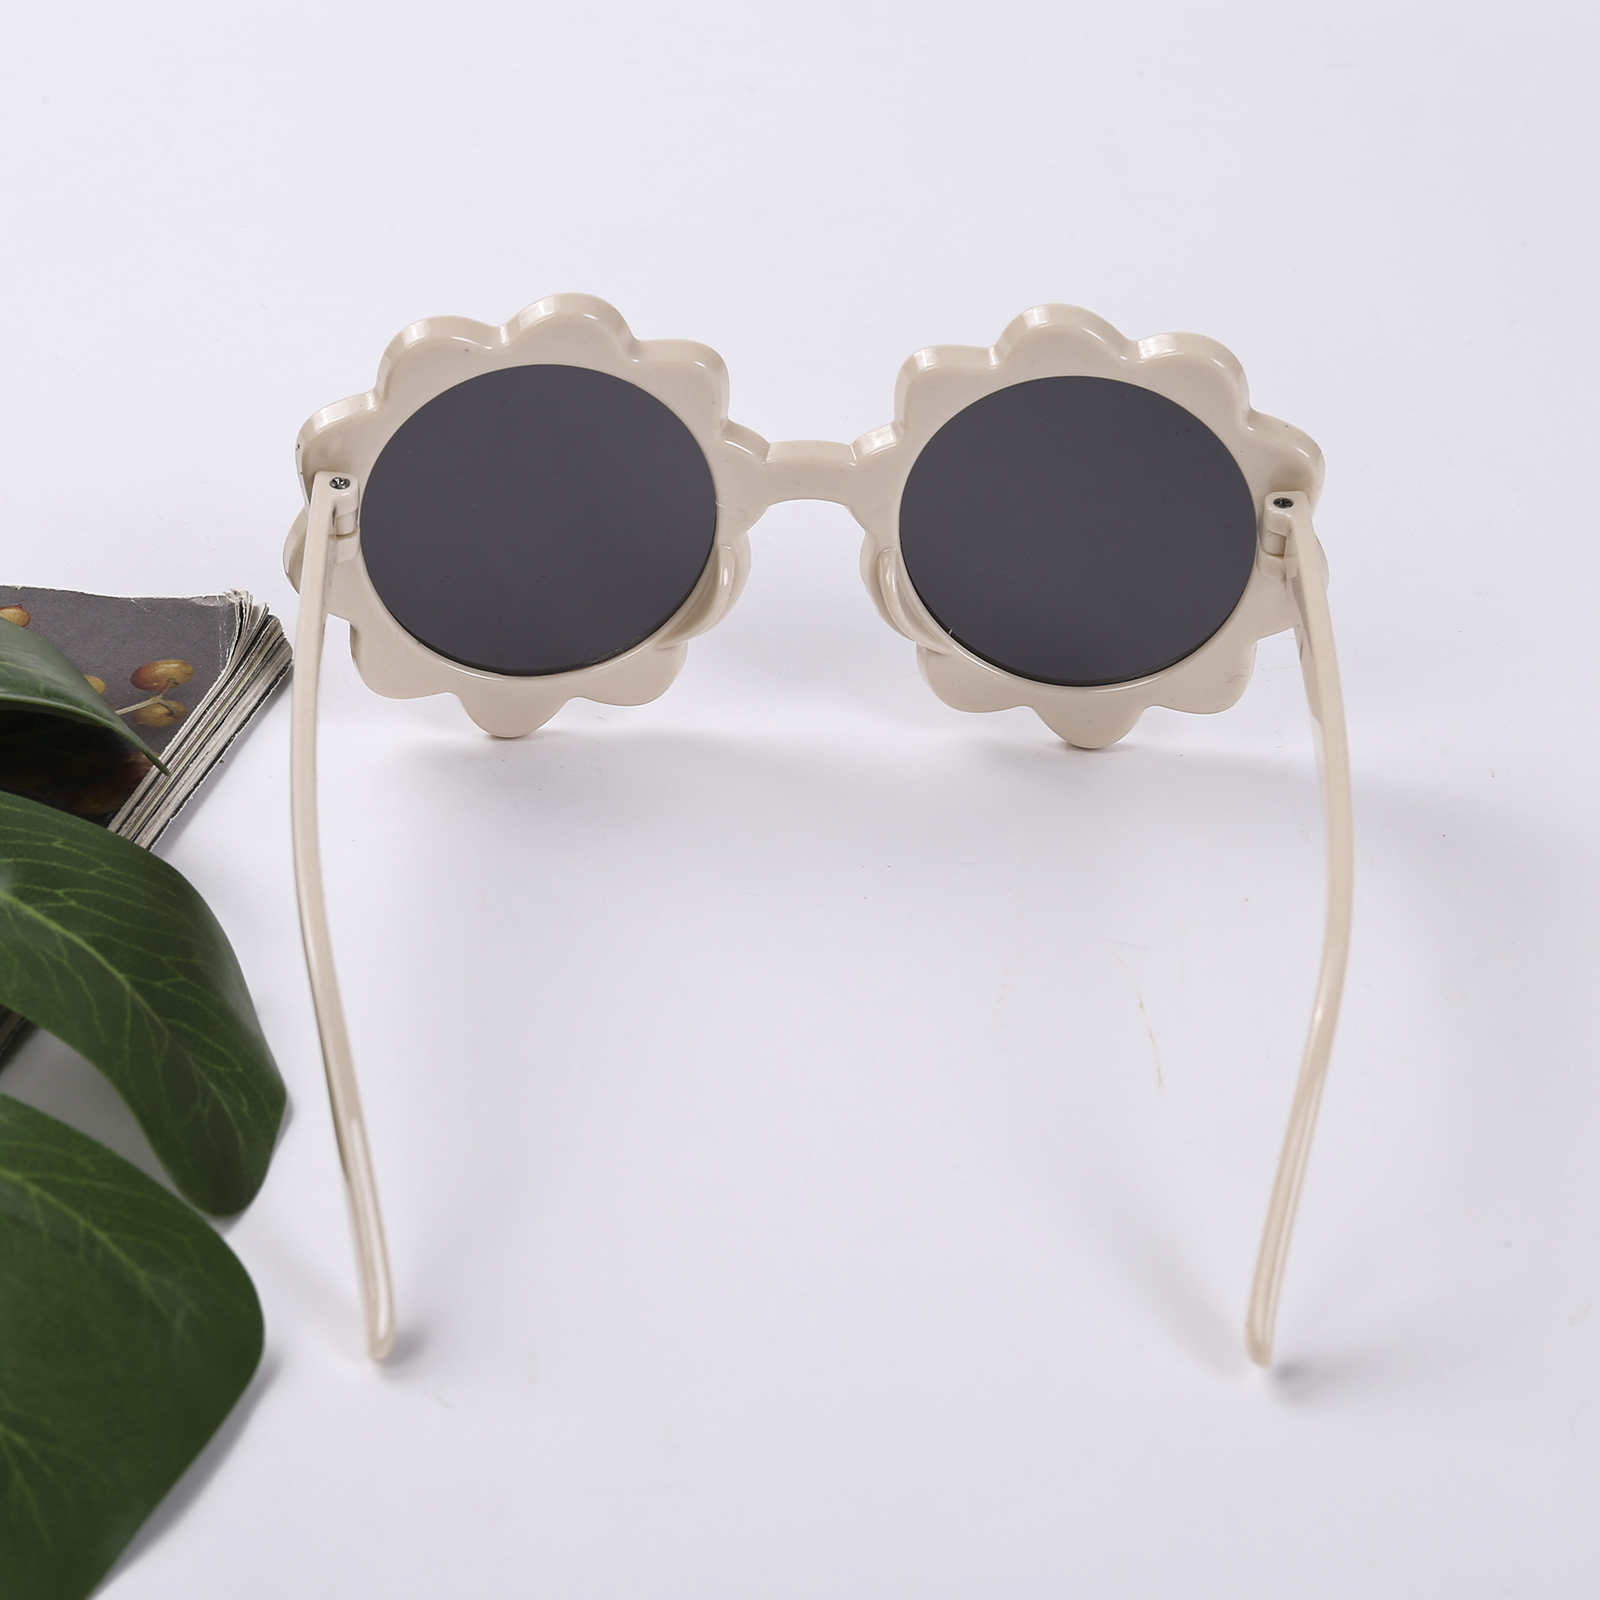 Binpure Kids Beach Sunglasses, Round Flower Shape UV400 Protection Sunglasses - image 5 of 7